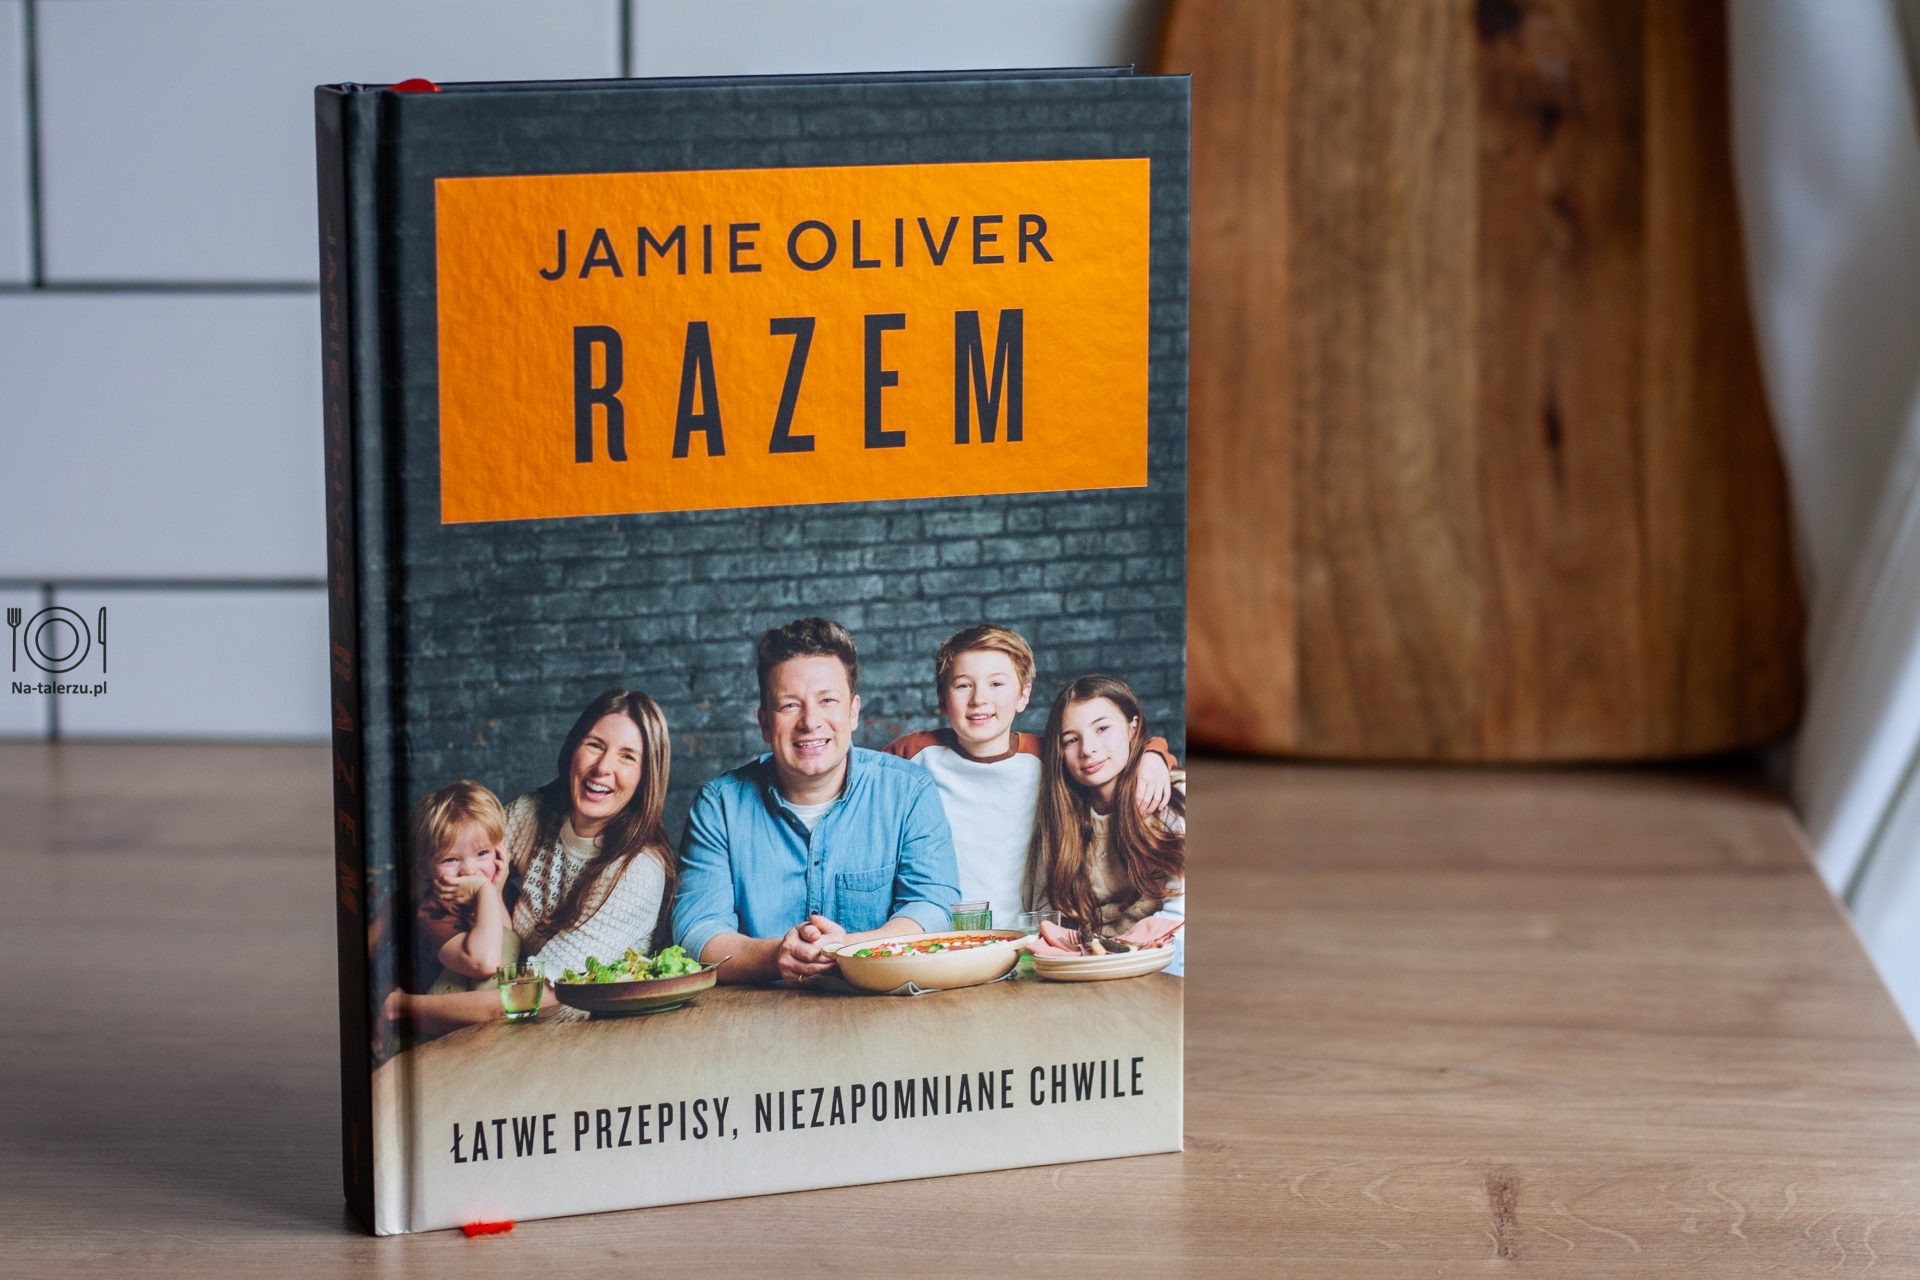 Jamie Oliver Razem